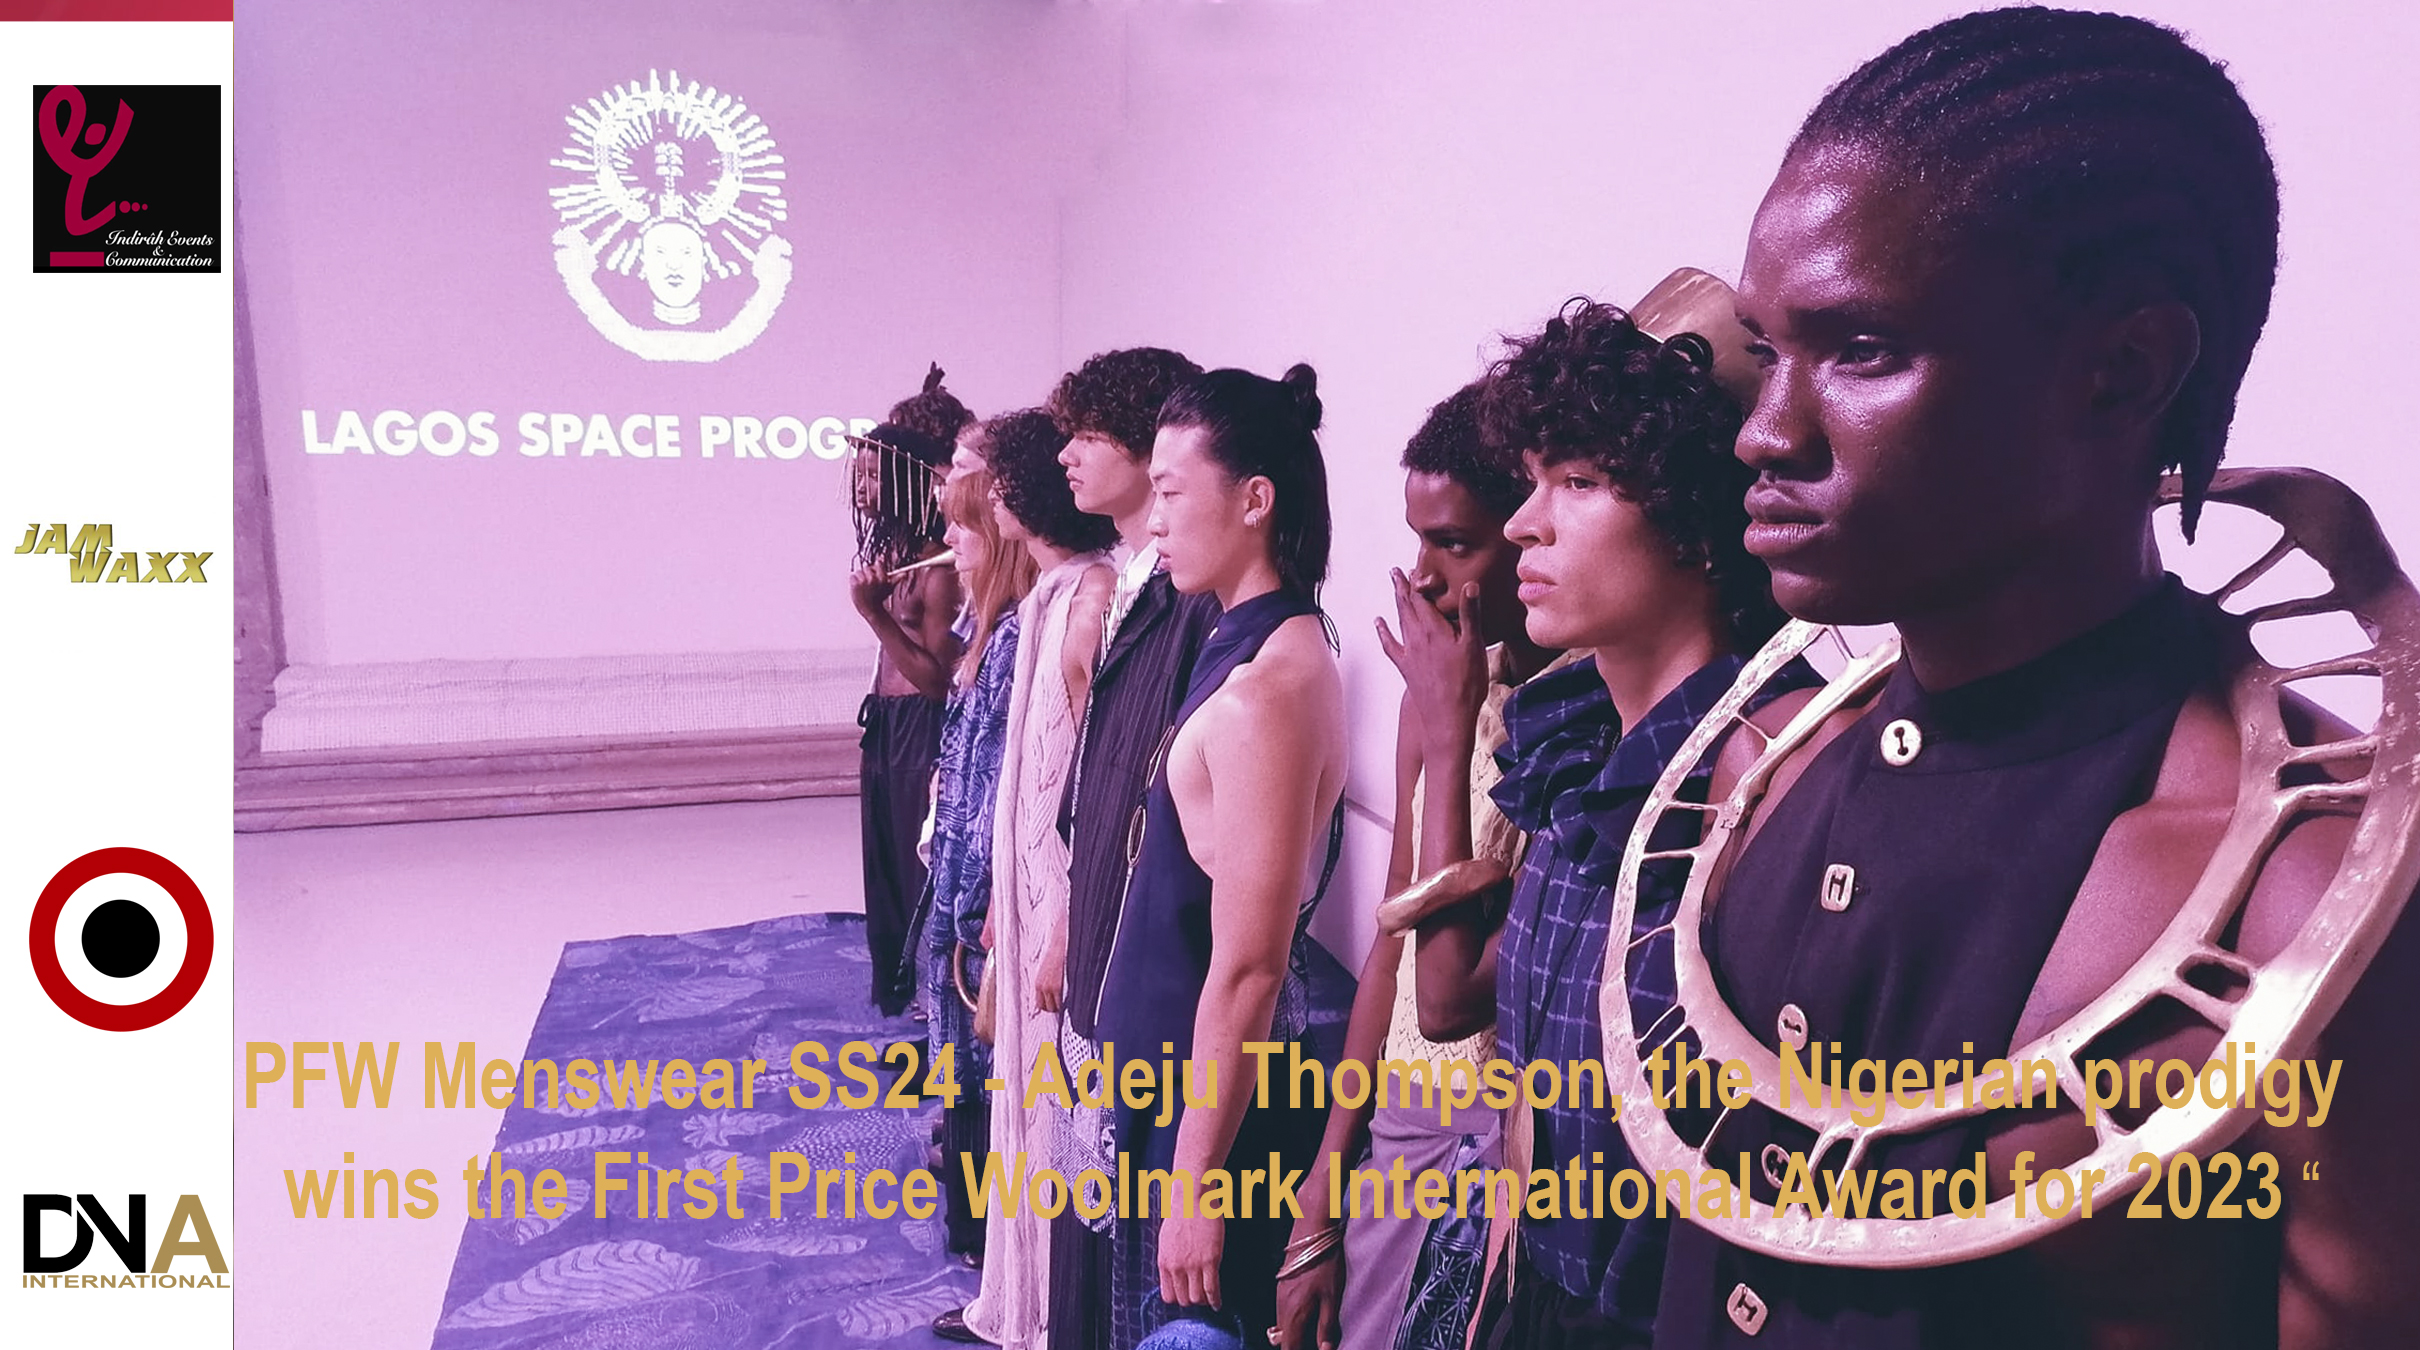 AFRICA-VOGUE-PFW-Menswear-SS24--Adeju-Thompson-from-Nigeria-wins-the-First-Price-Woolmark-International-Award-for-2023-DN-AFRICA-MEDIA-PARTNER